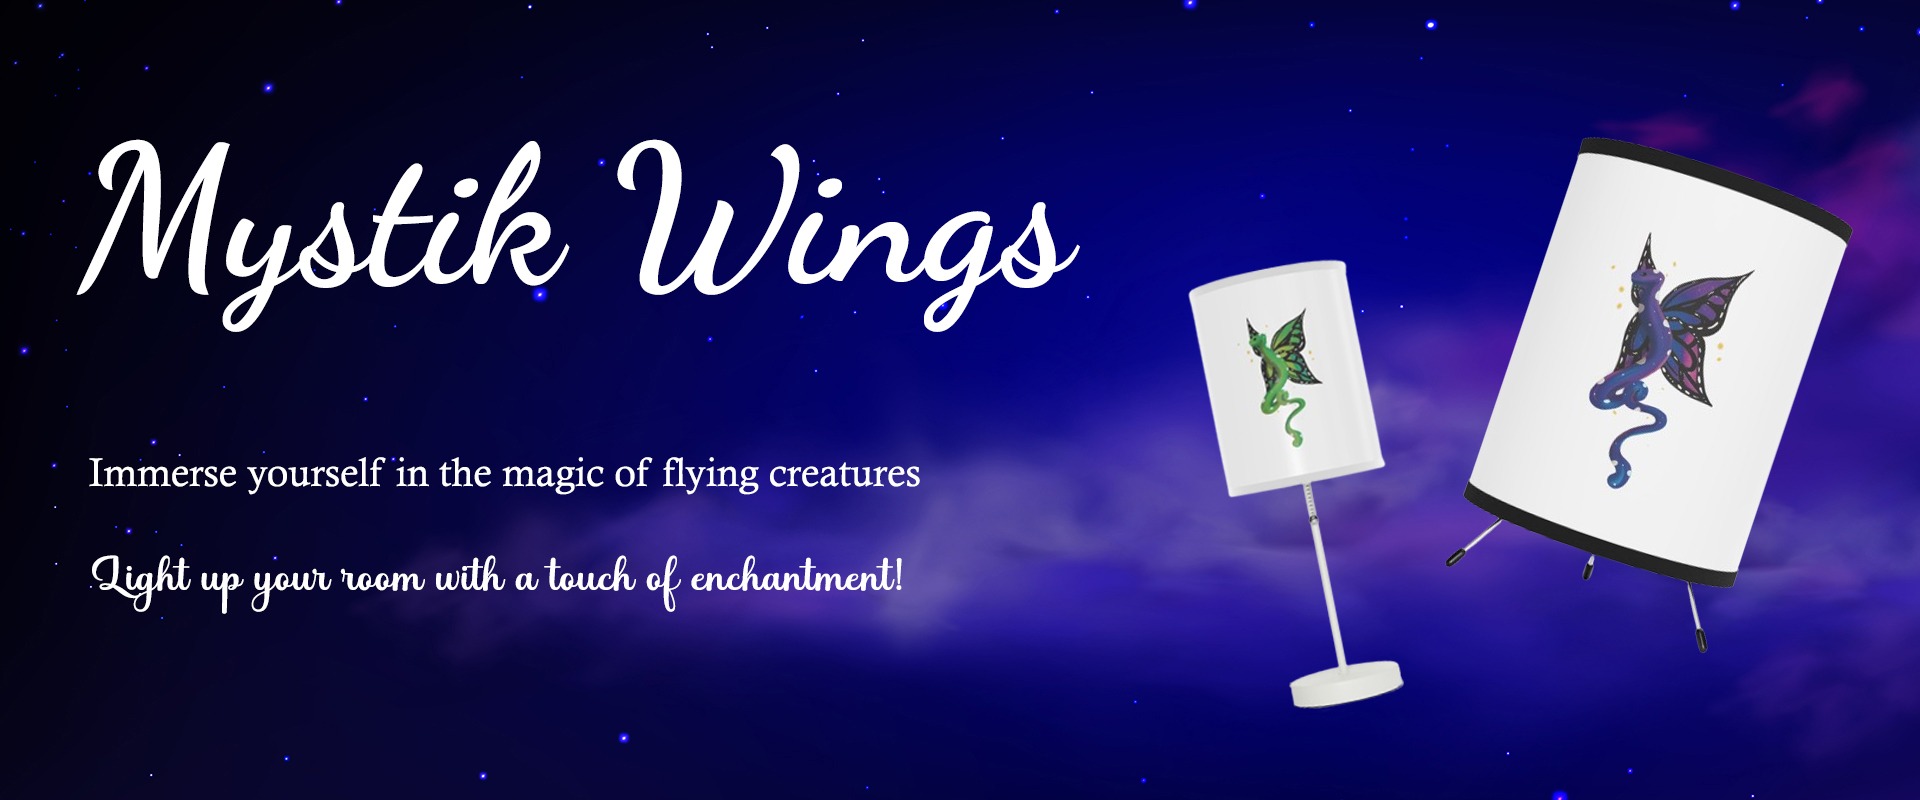 mystik wings - PC